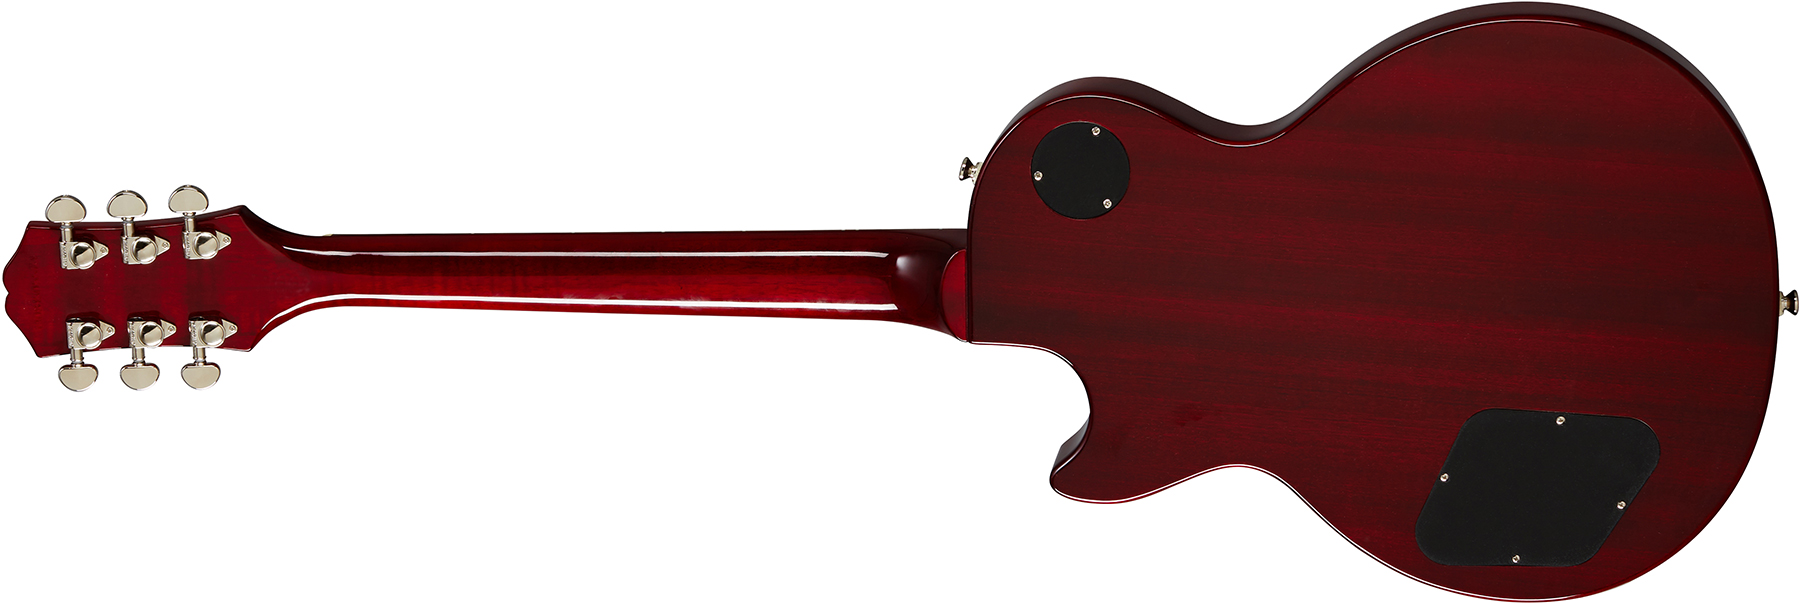 Epiphone Les Paul Studio 2h Ht Pf - Wine Red - Single cut electric guitar - Variation 1